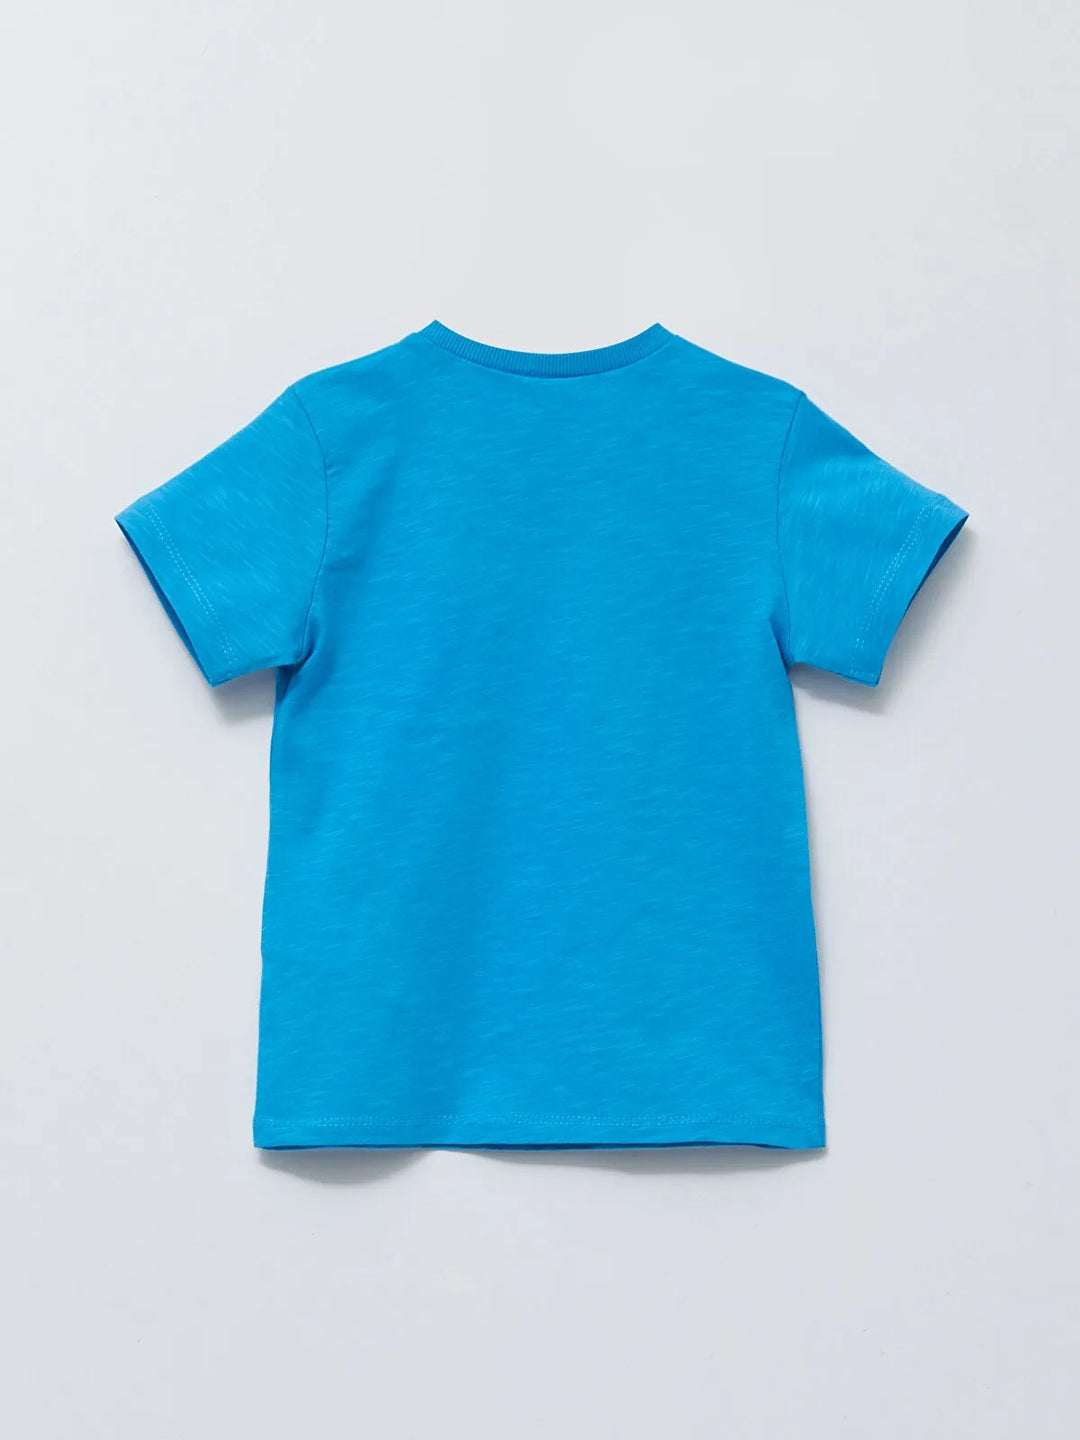 Crew Neck Short Sleeve Basic Baby Boy T-Shirt